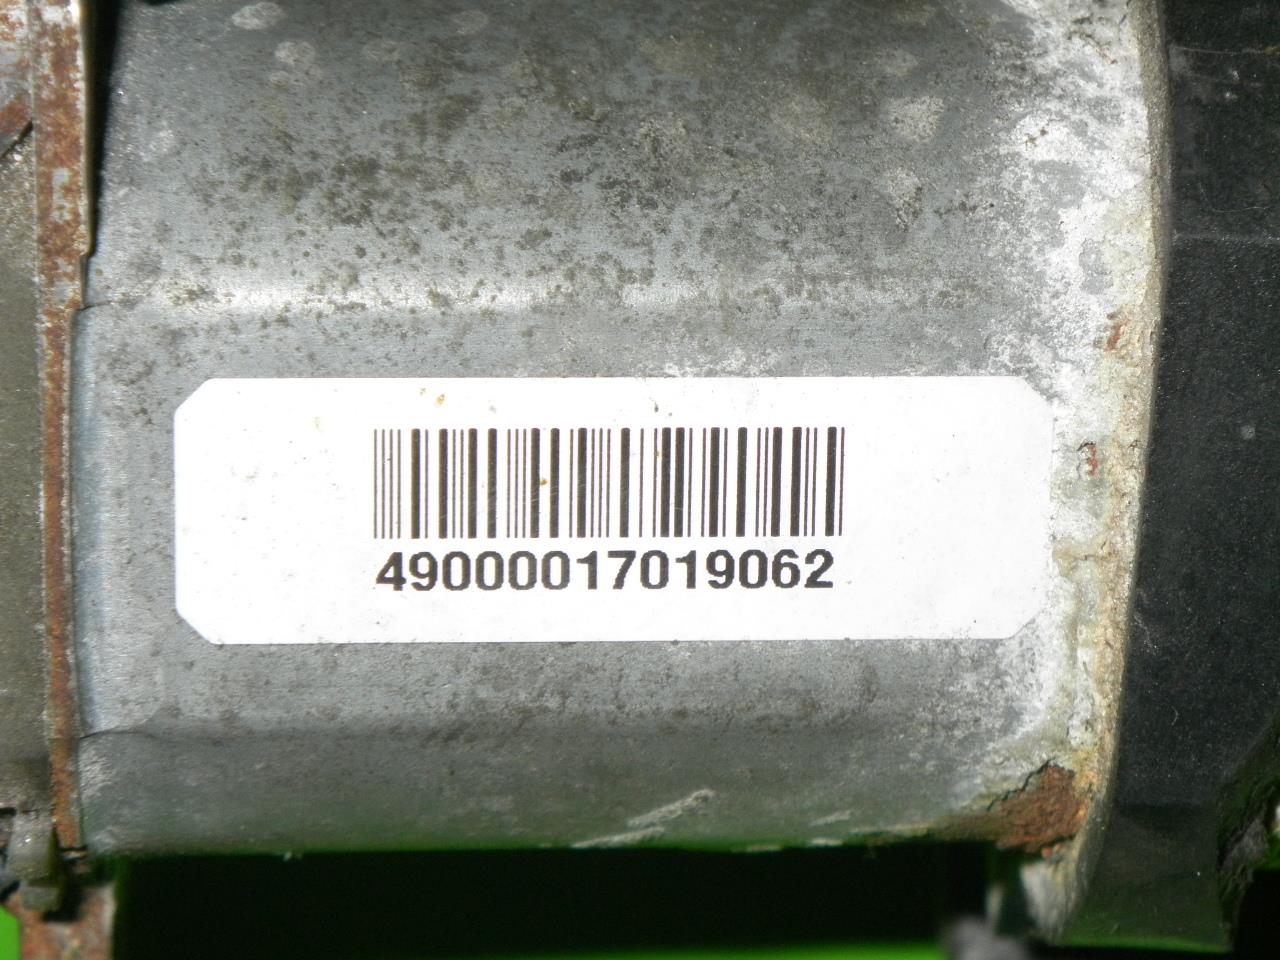 Stellmotor Getriebe SMART(MCC) CABRIO (450) 0.8 CDI (S1OLC1, 450.401, 450.402, 450.403, 450,400) 1296009801 - 241314